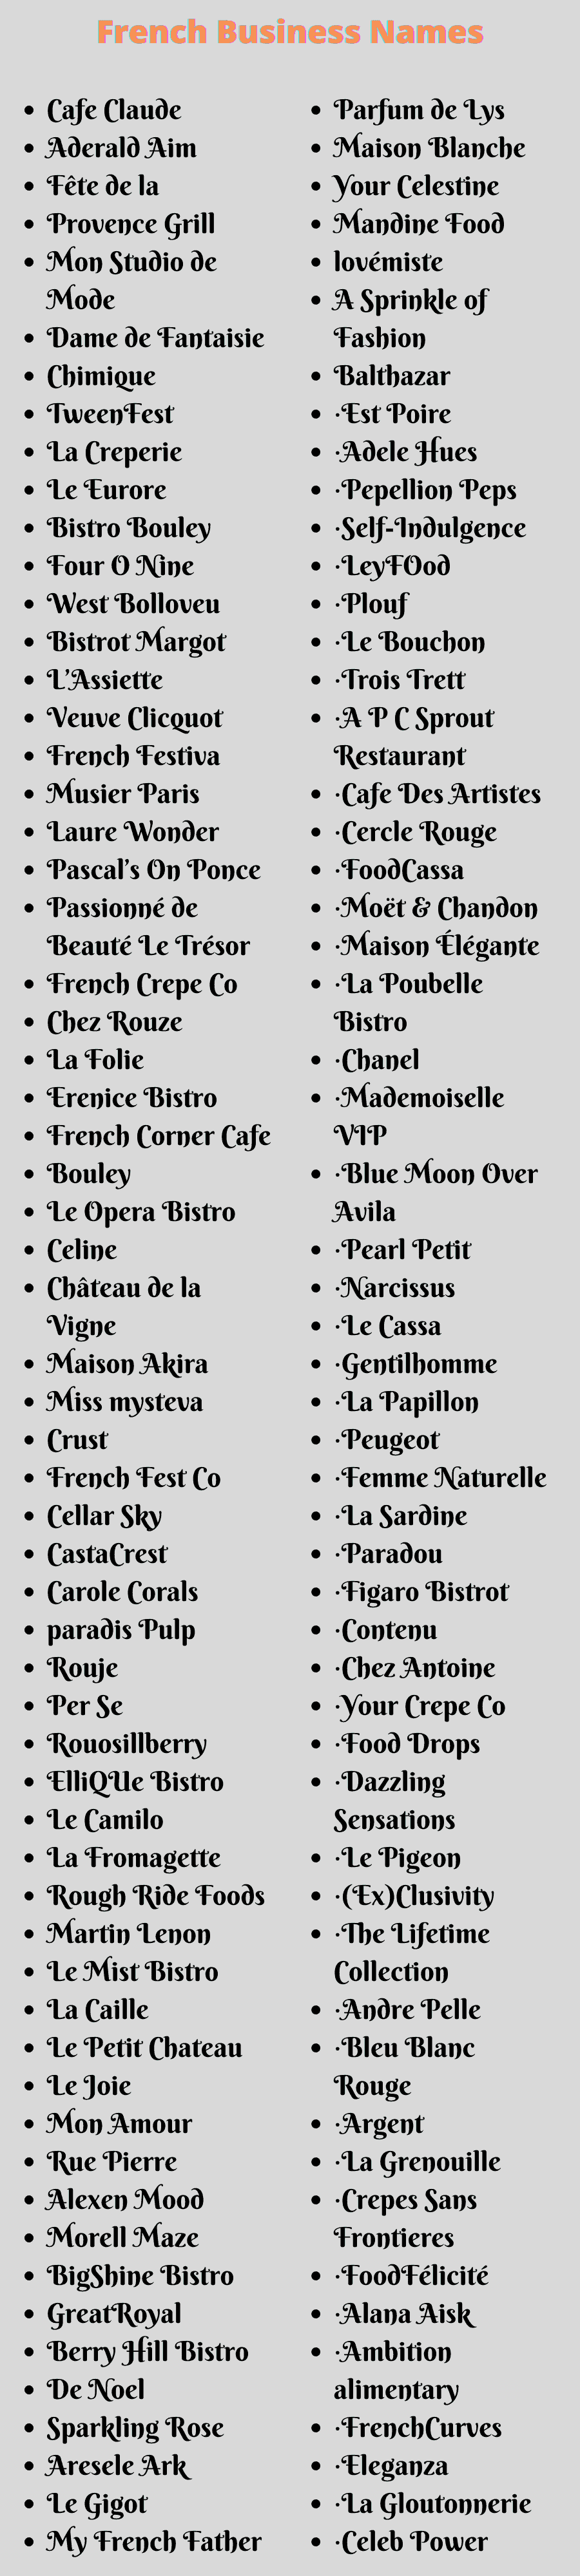 french boutique names｜TikTok Search